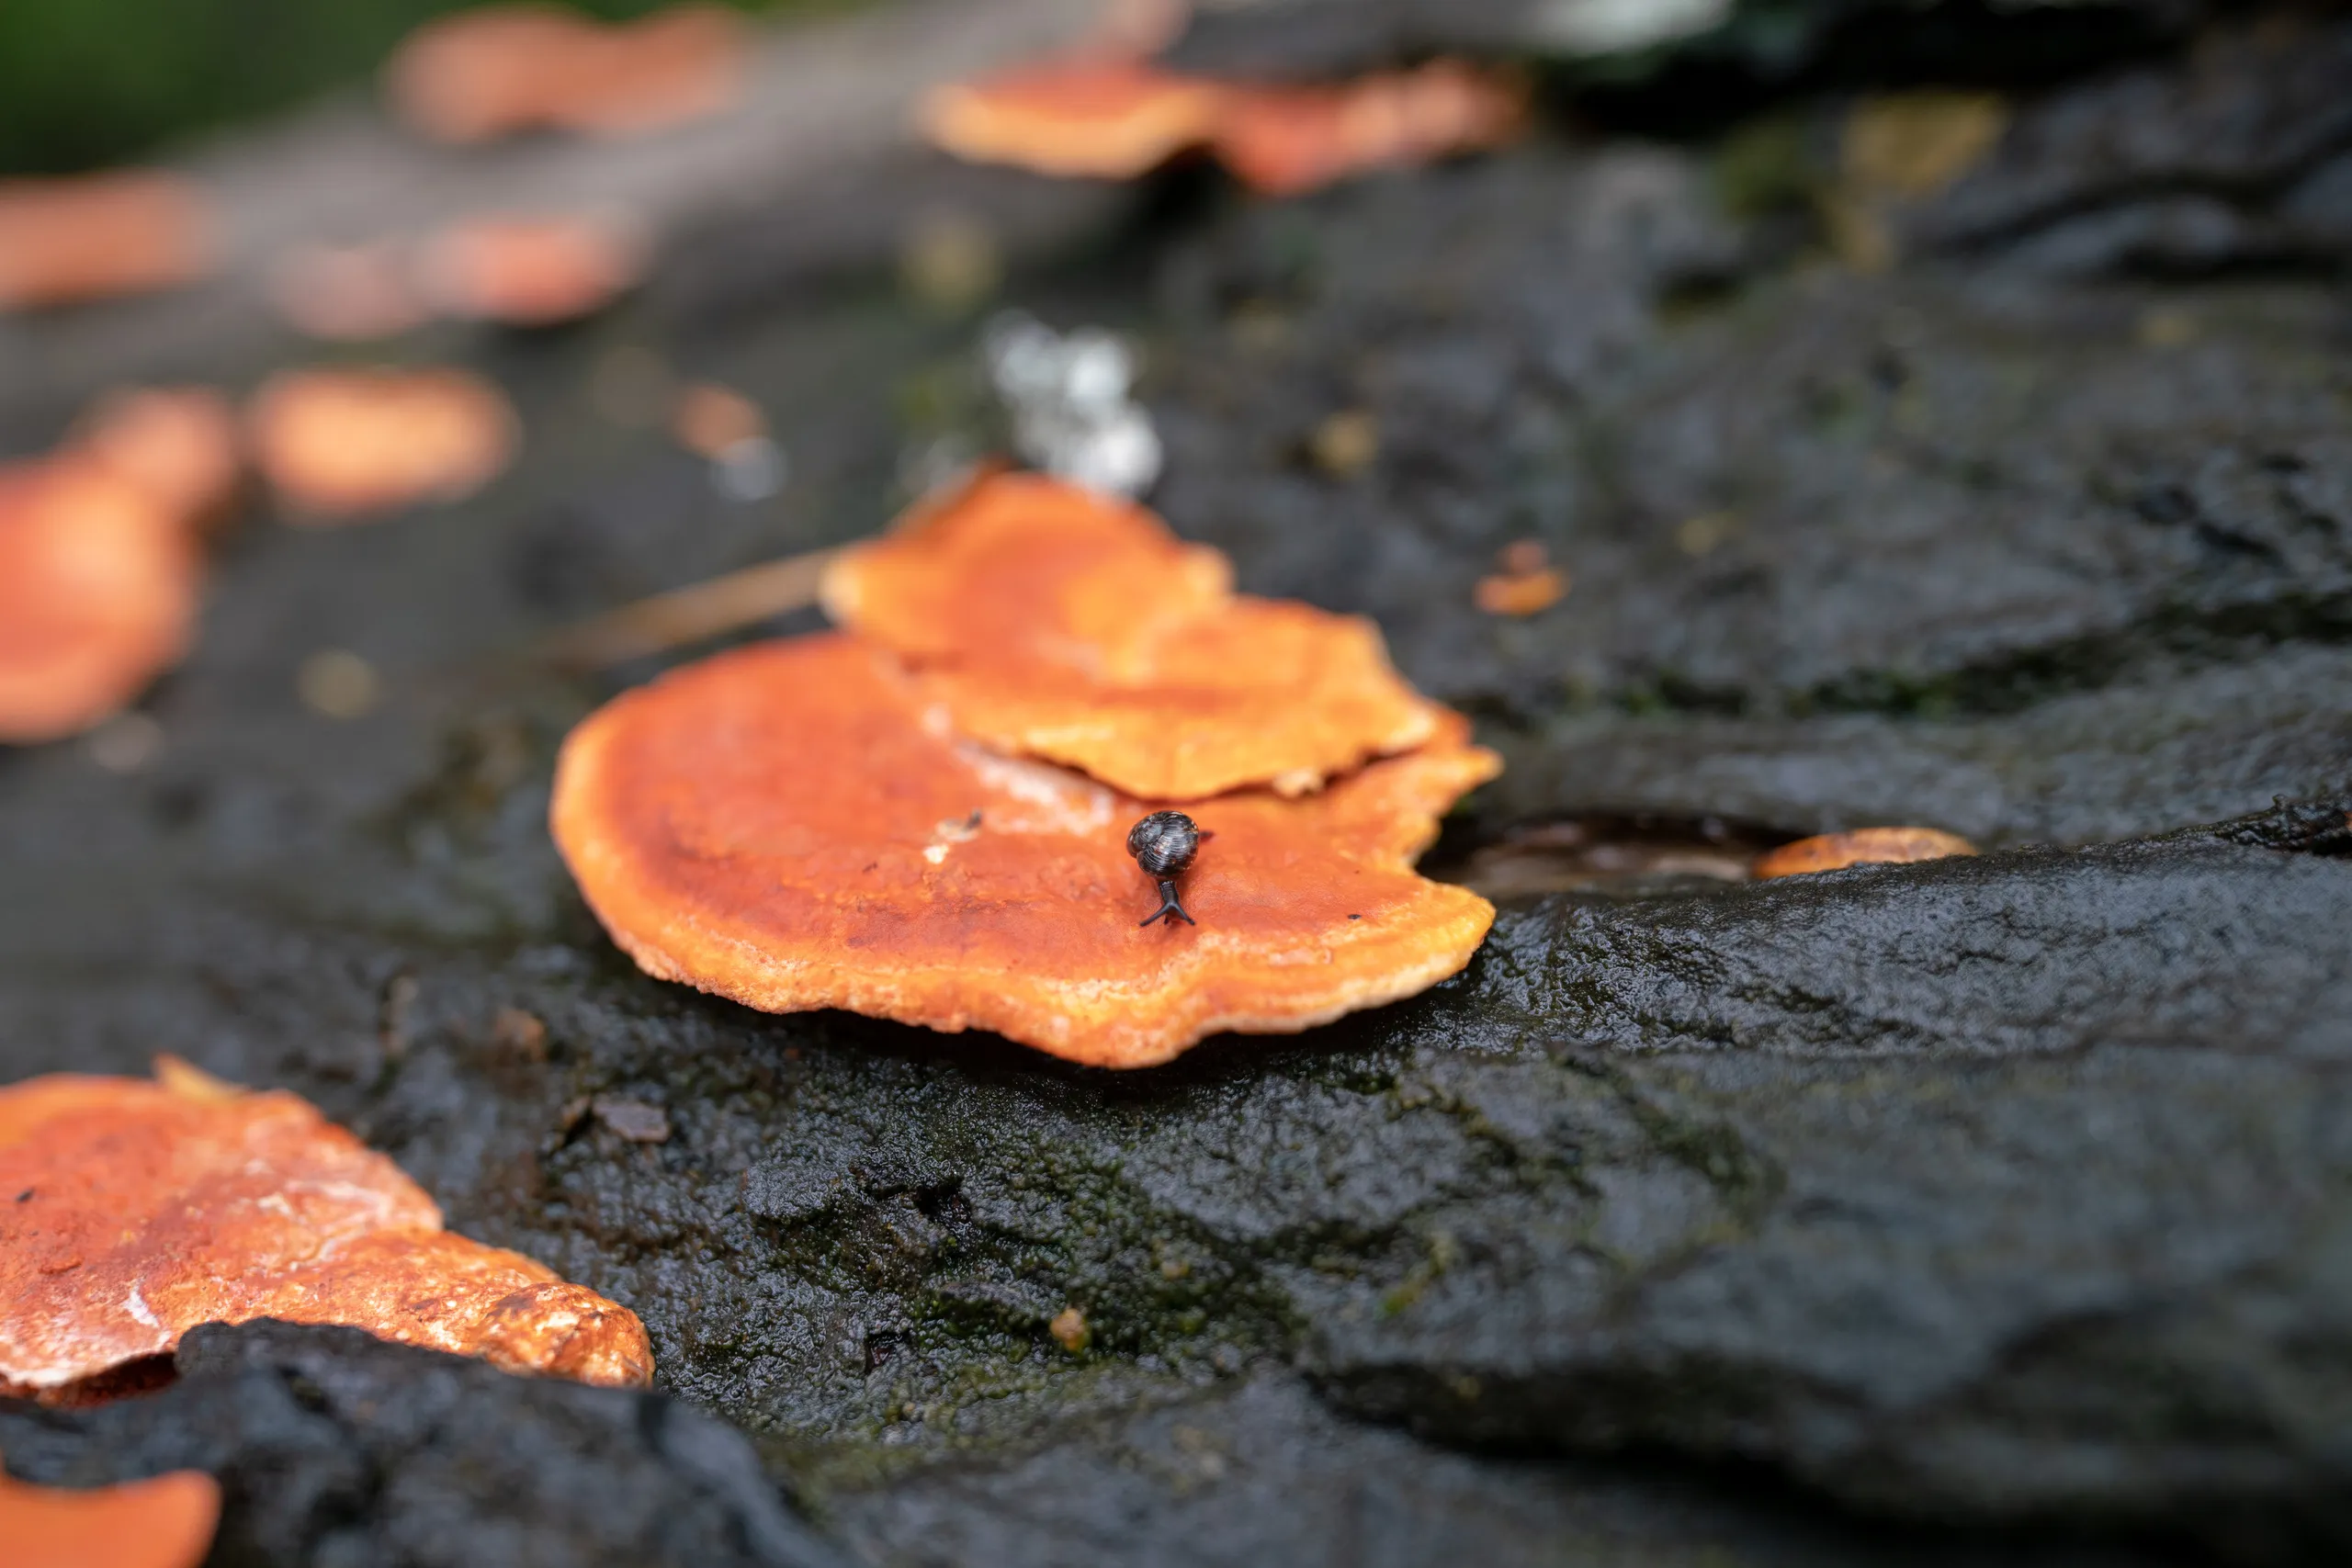 Tiny snail, possibly a carnivorous Powelliphanta variety, on a large orange fungus